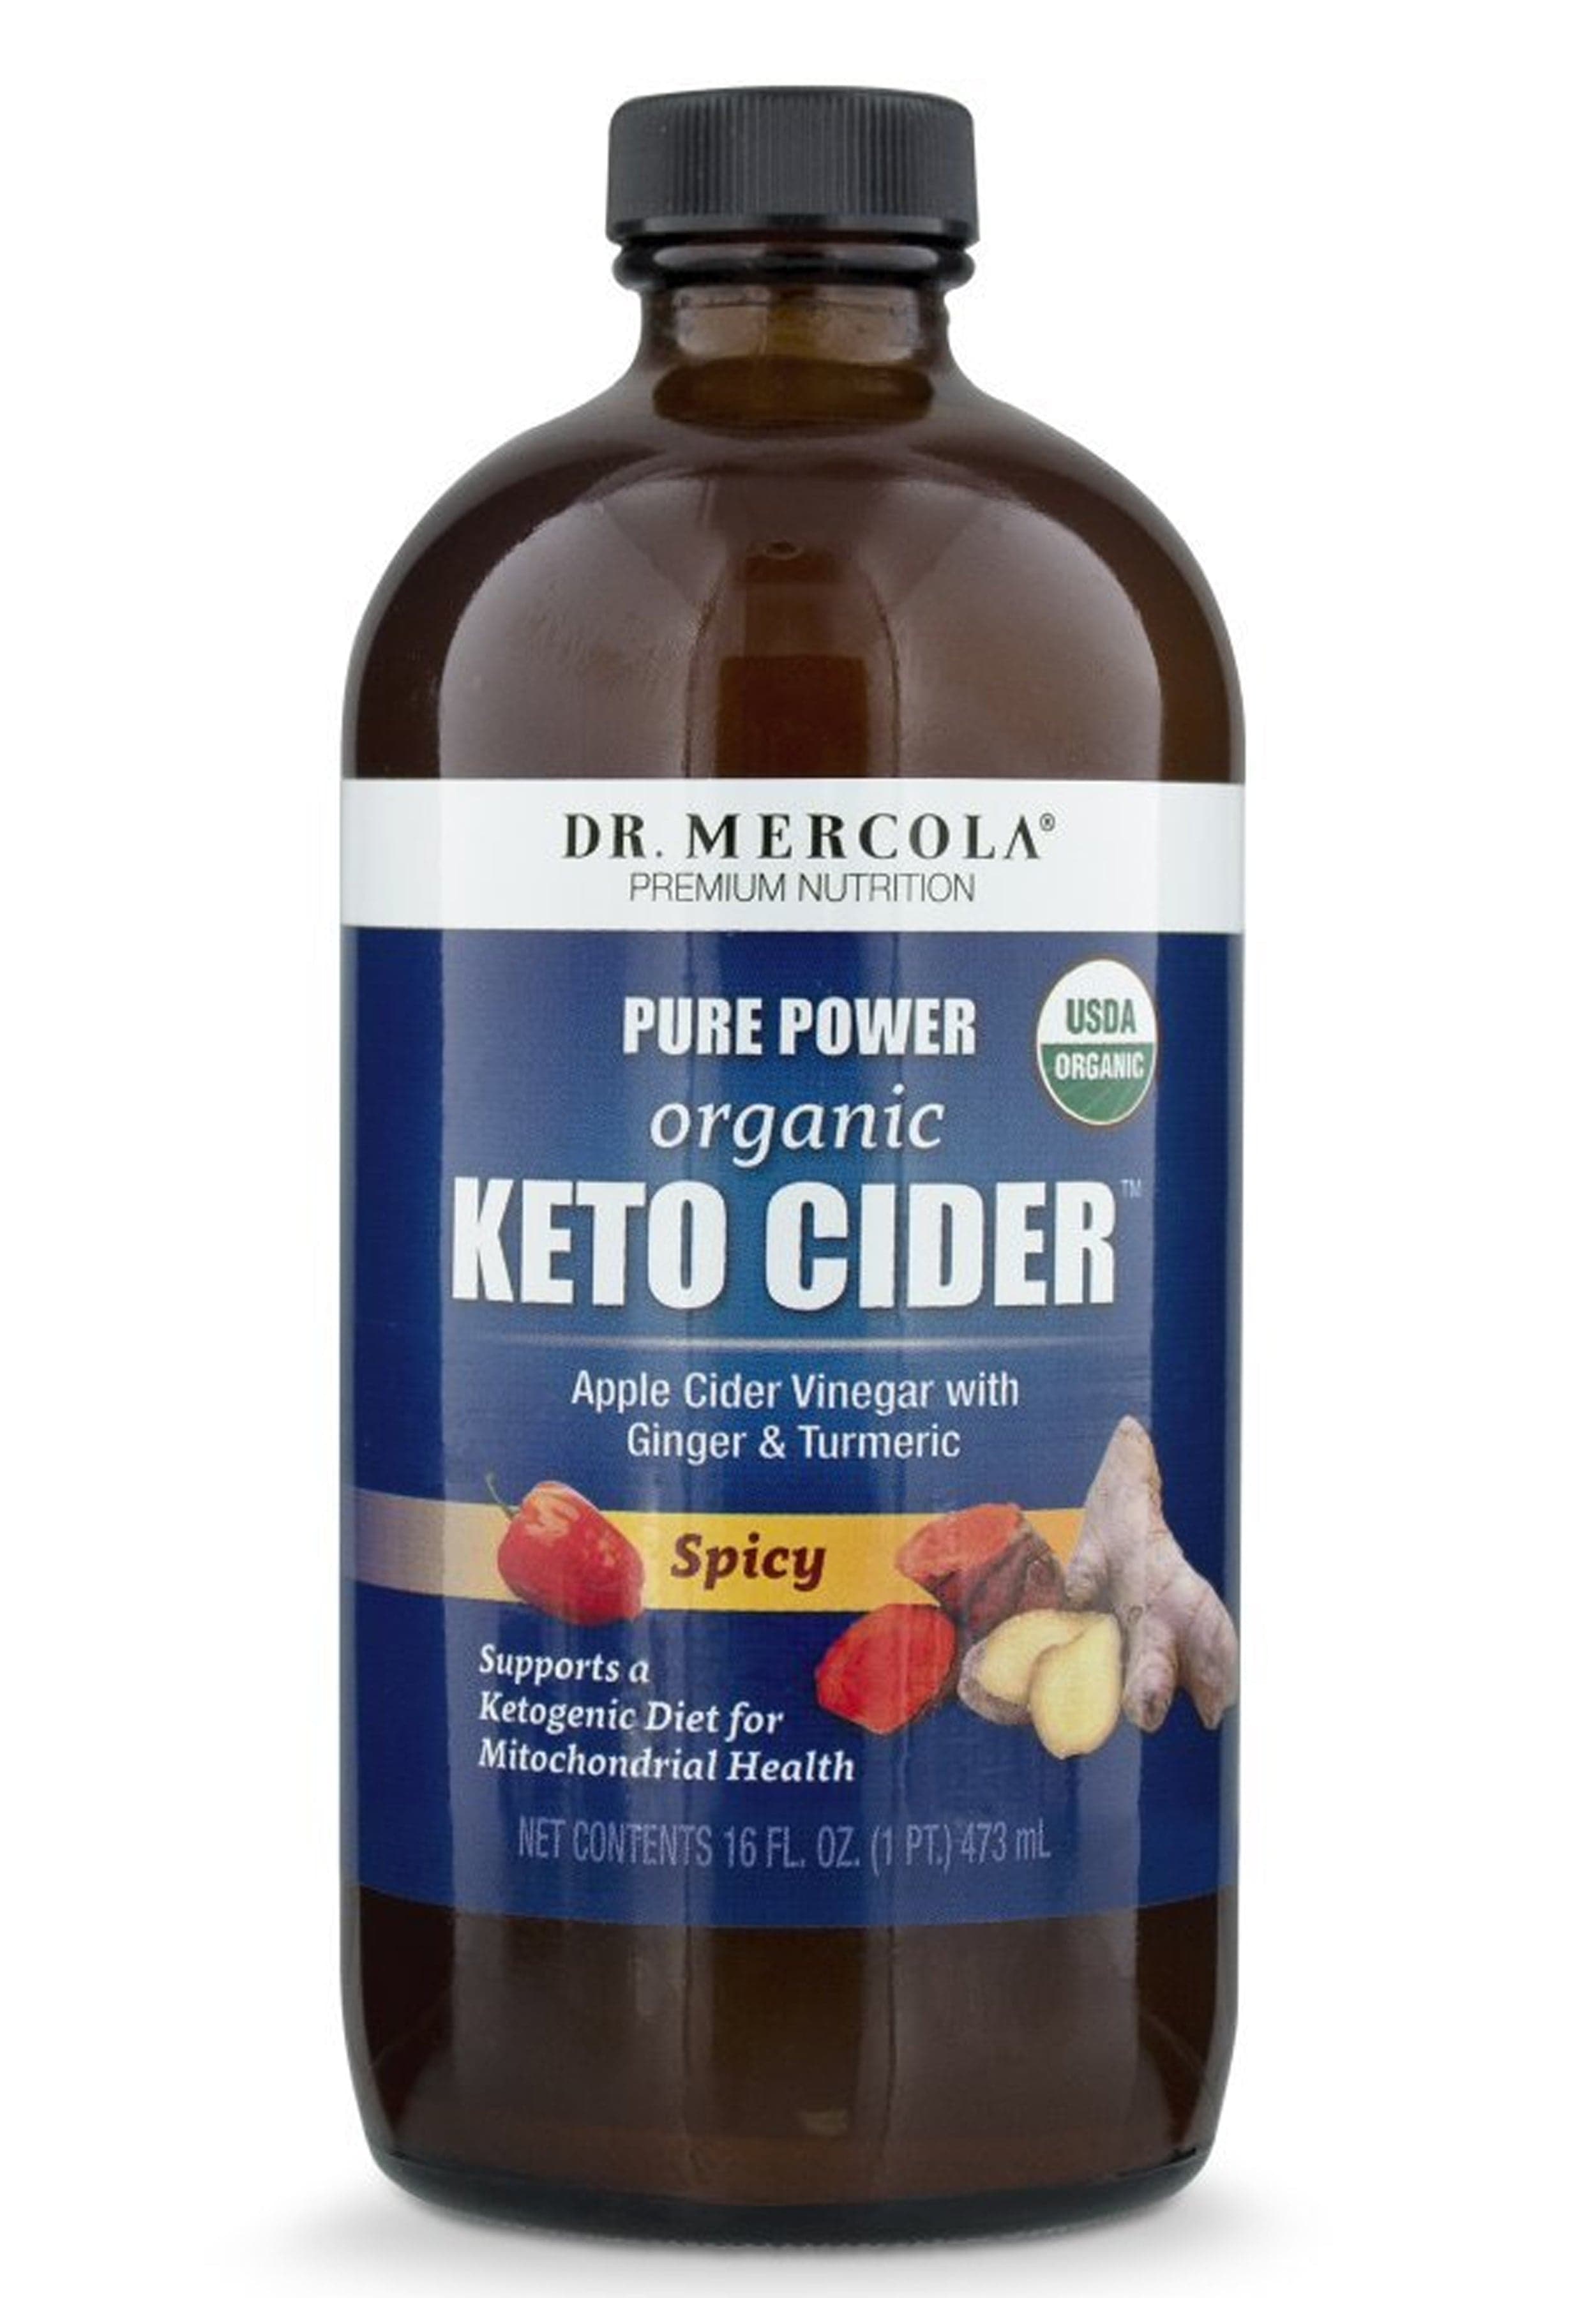 Dr. Mercola Organic Keto Cider Spicy (Apple Cider Vinegar Spicy Organic)